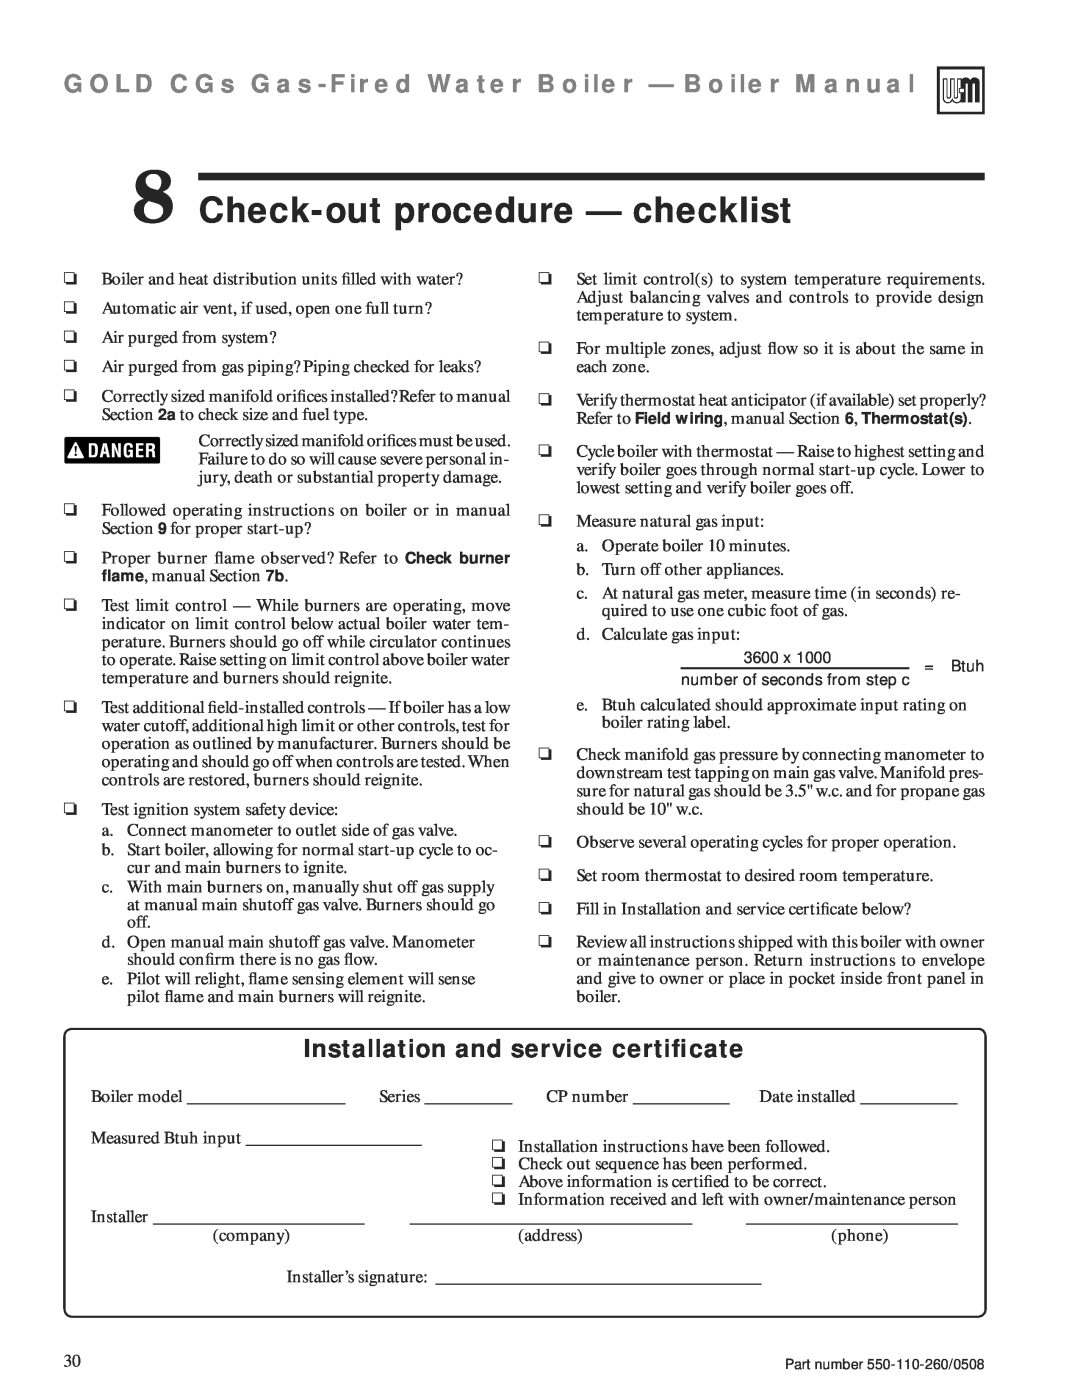 Weil-McLain 550-110-260/0508 manual Check-outprocedure — checklist, Installation and service certiﬁcate 